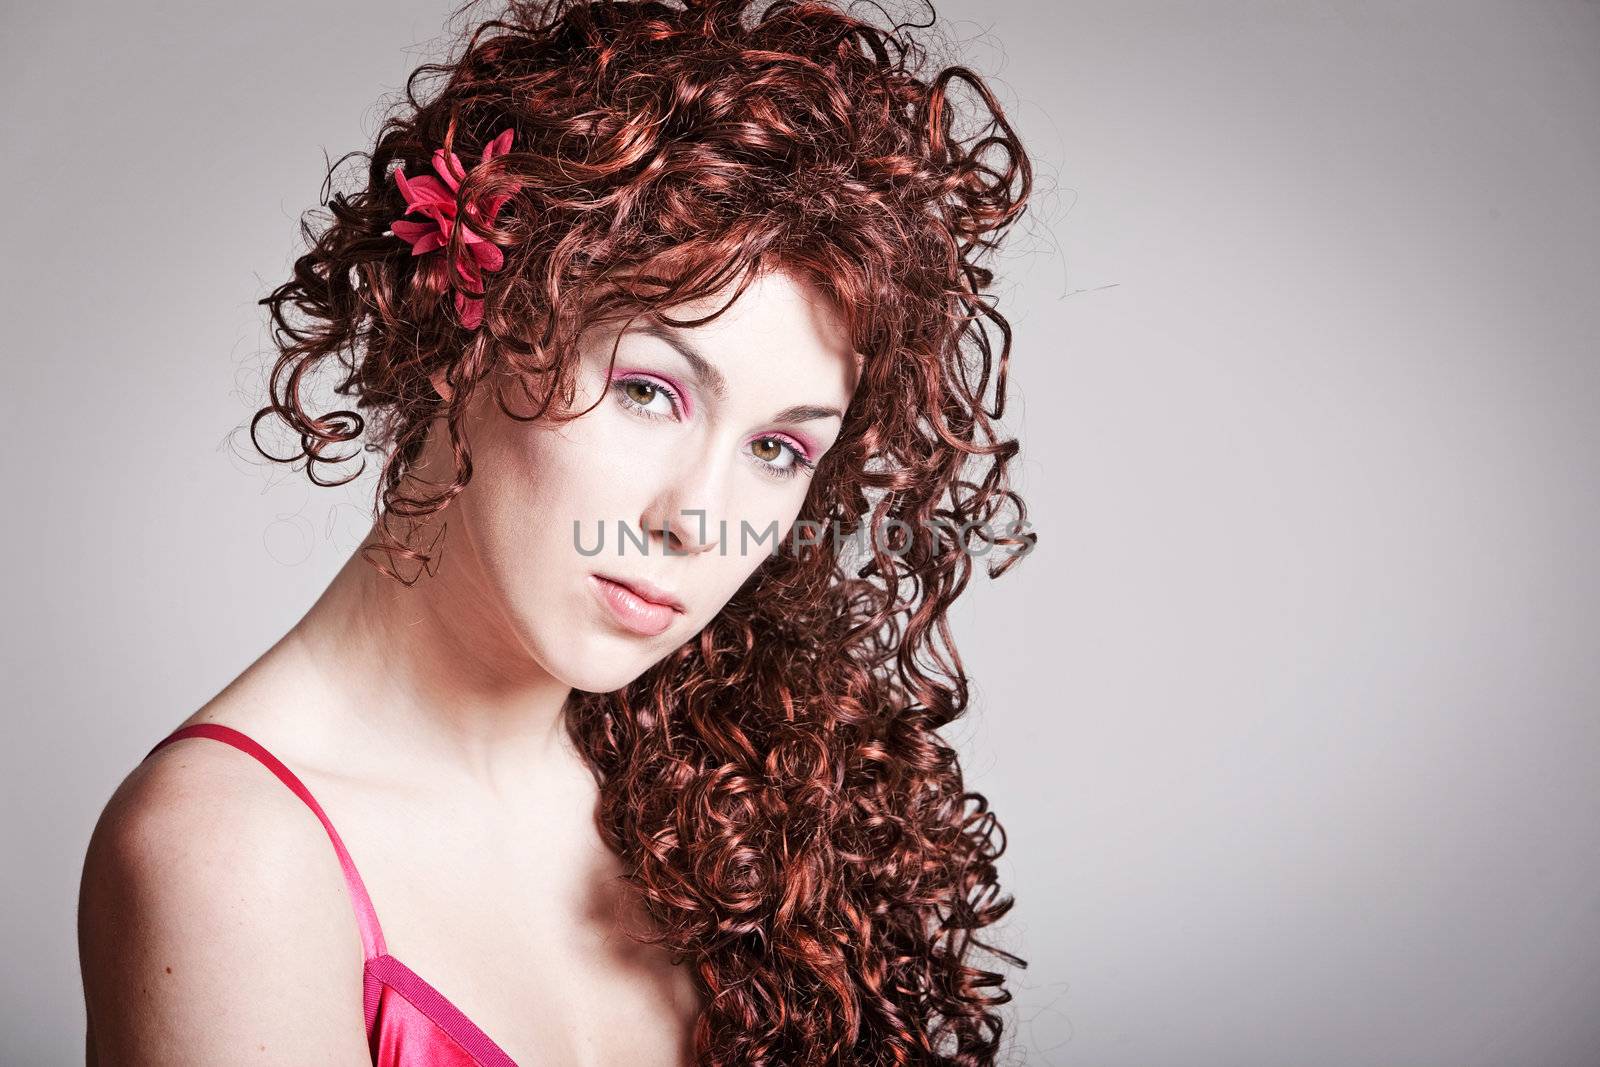 Gorgeous redhead by Fotosmurf